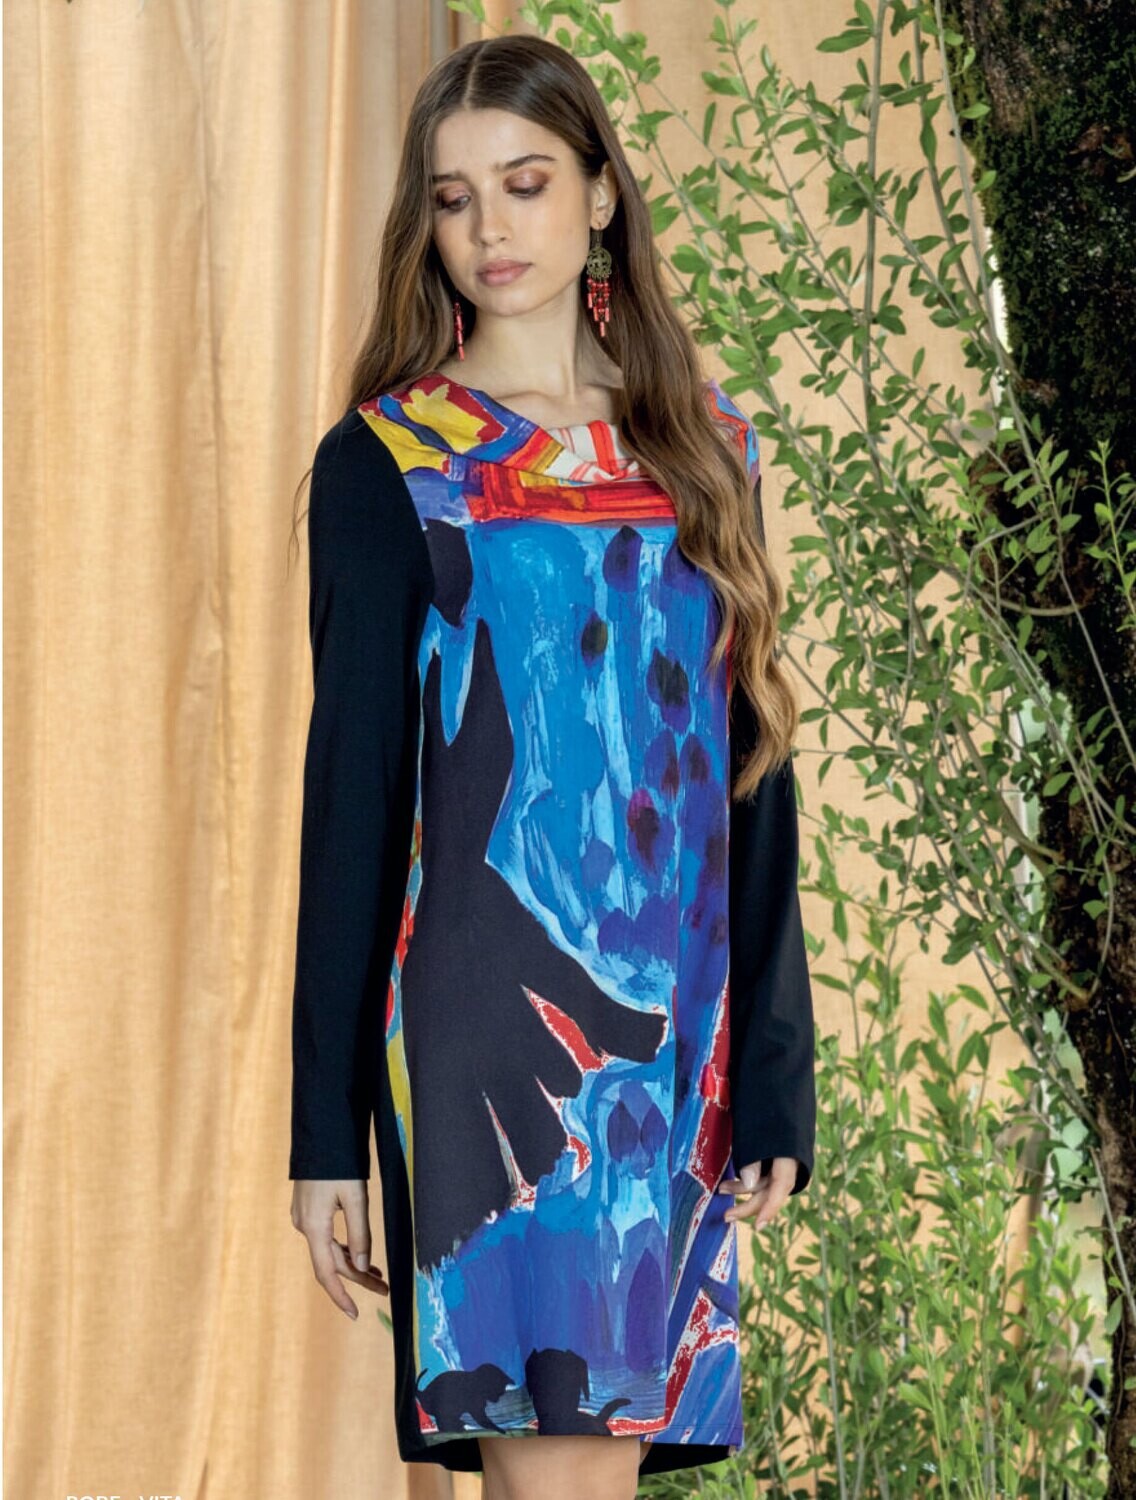 Maloka: Dolce Vita Art Contrast Dress